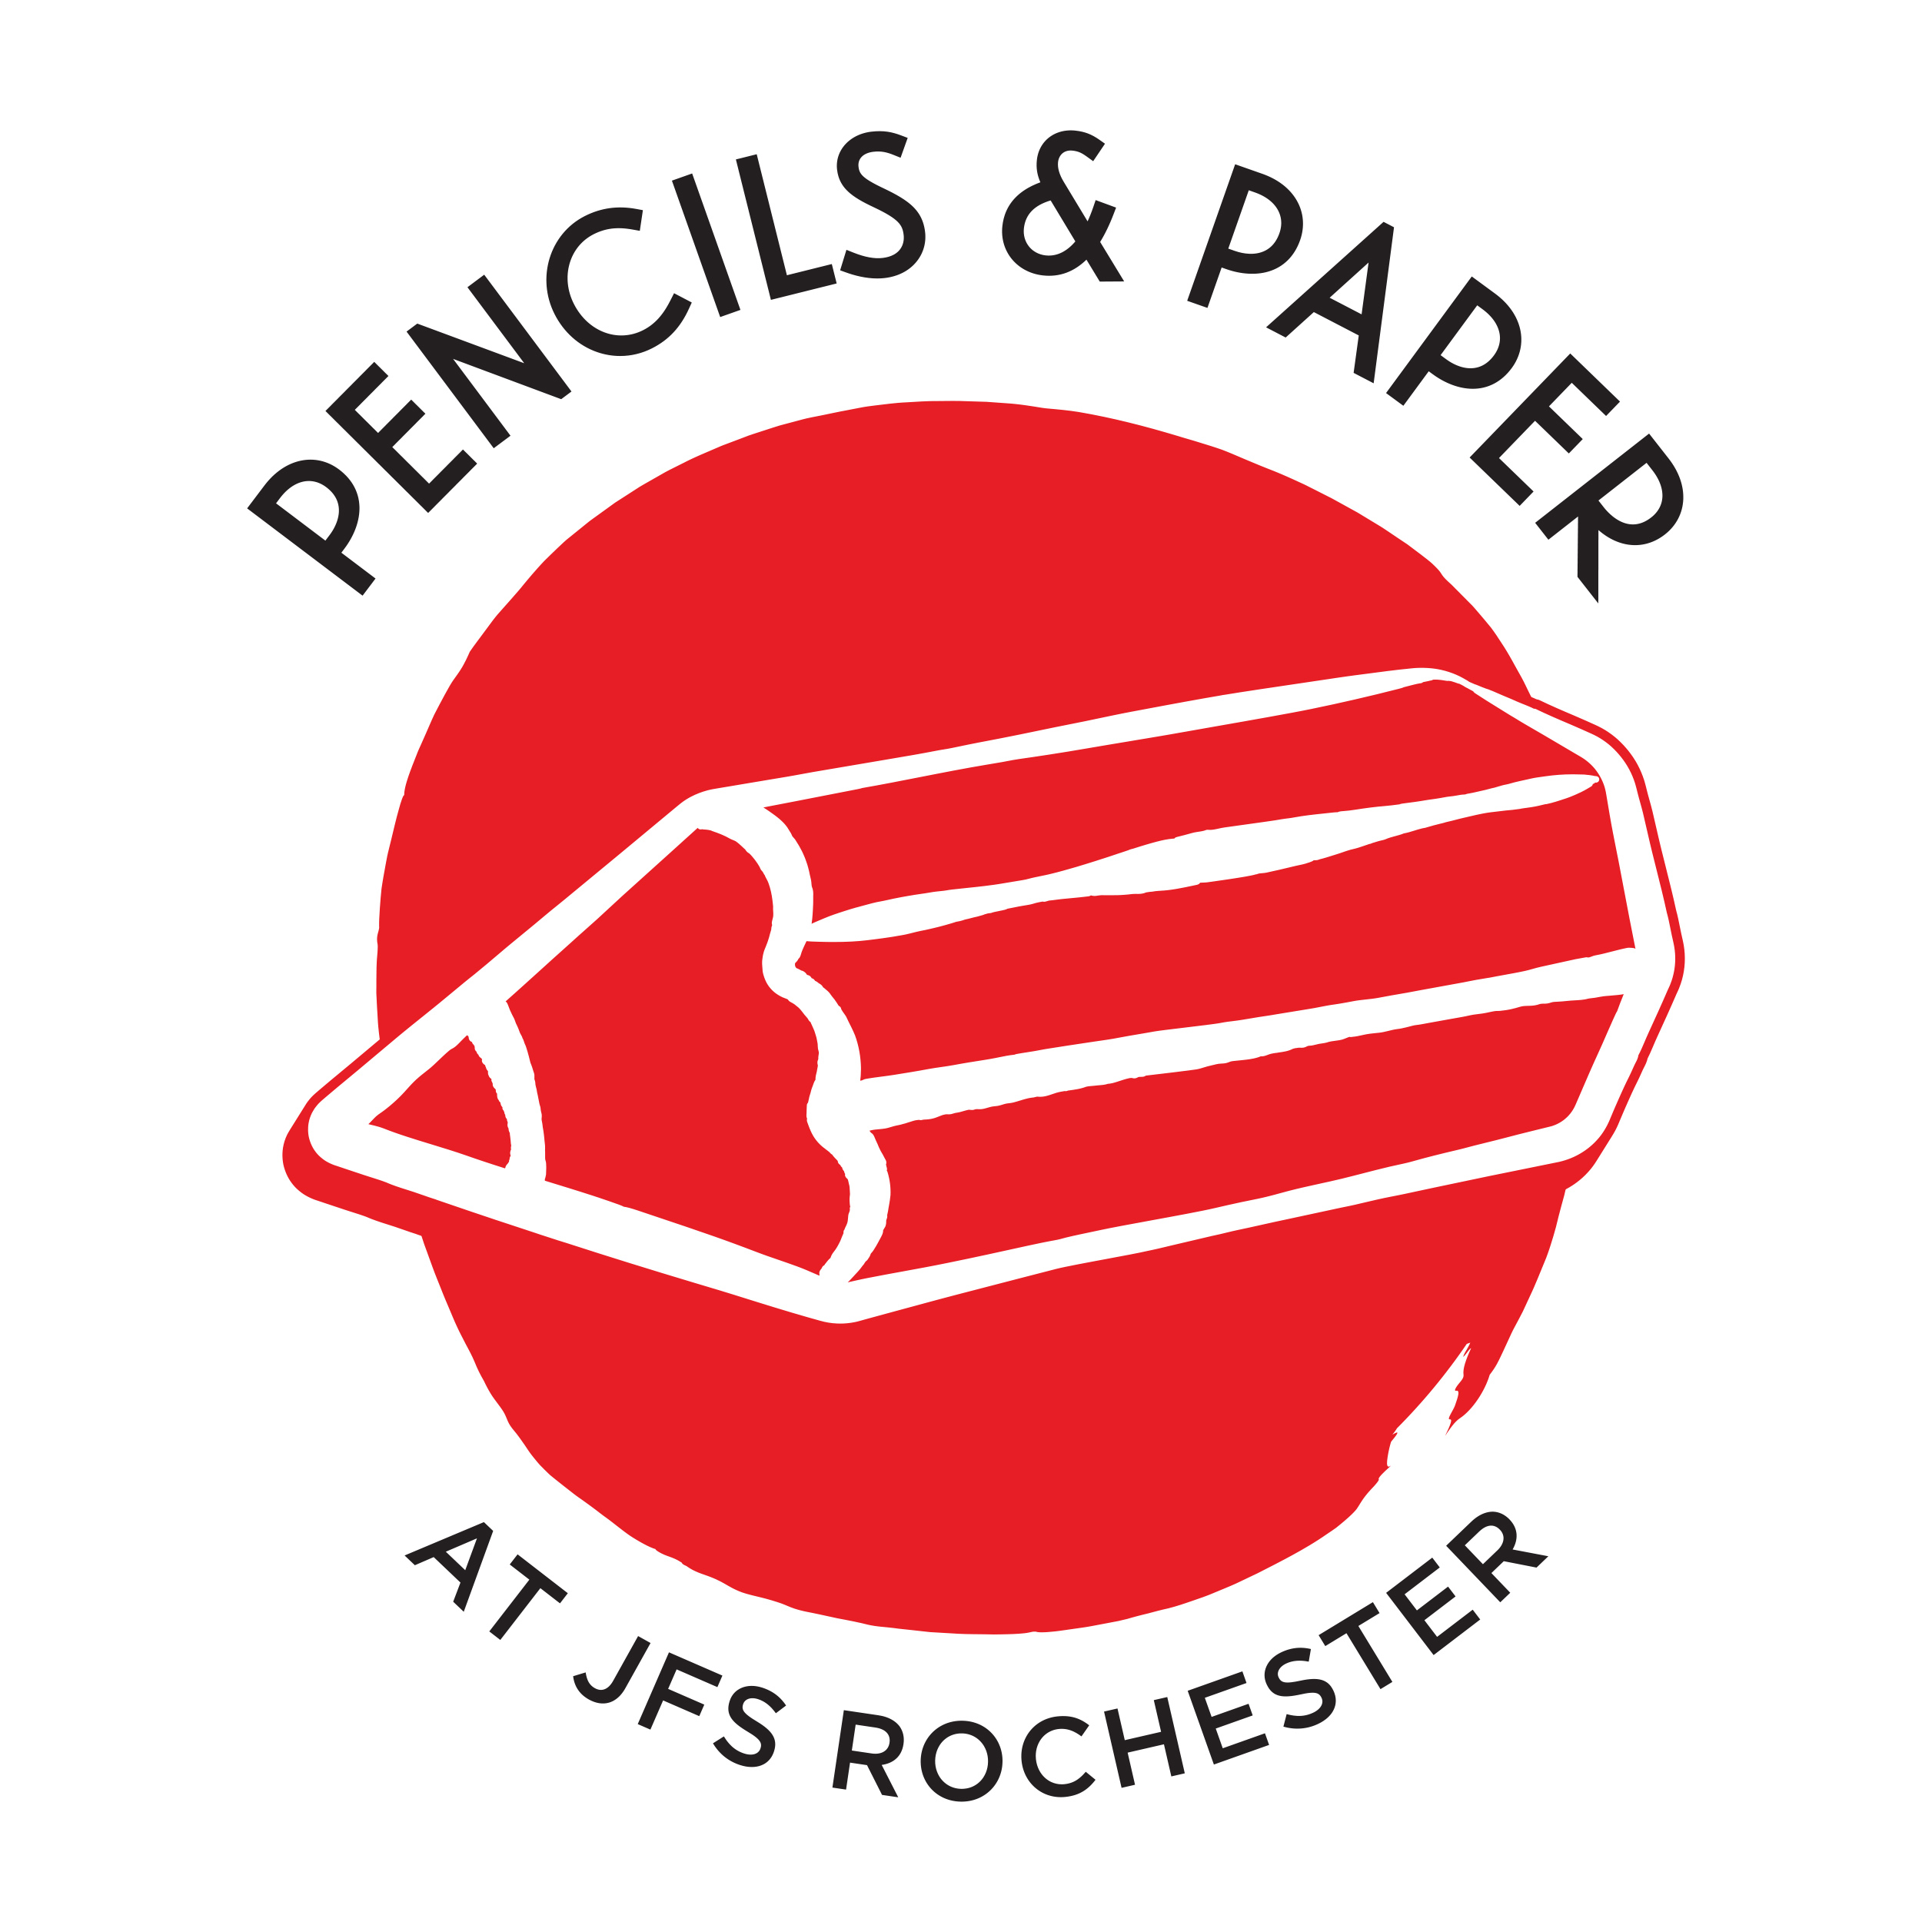 The Pencils & Paper Program at JFS Rochester